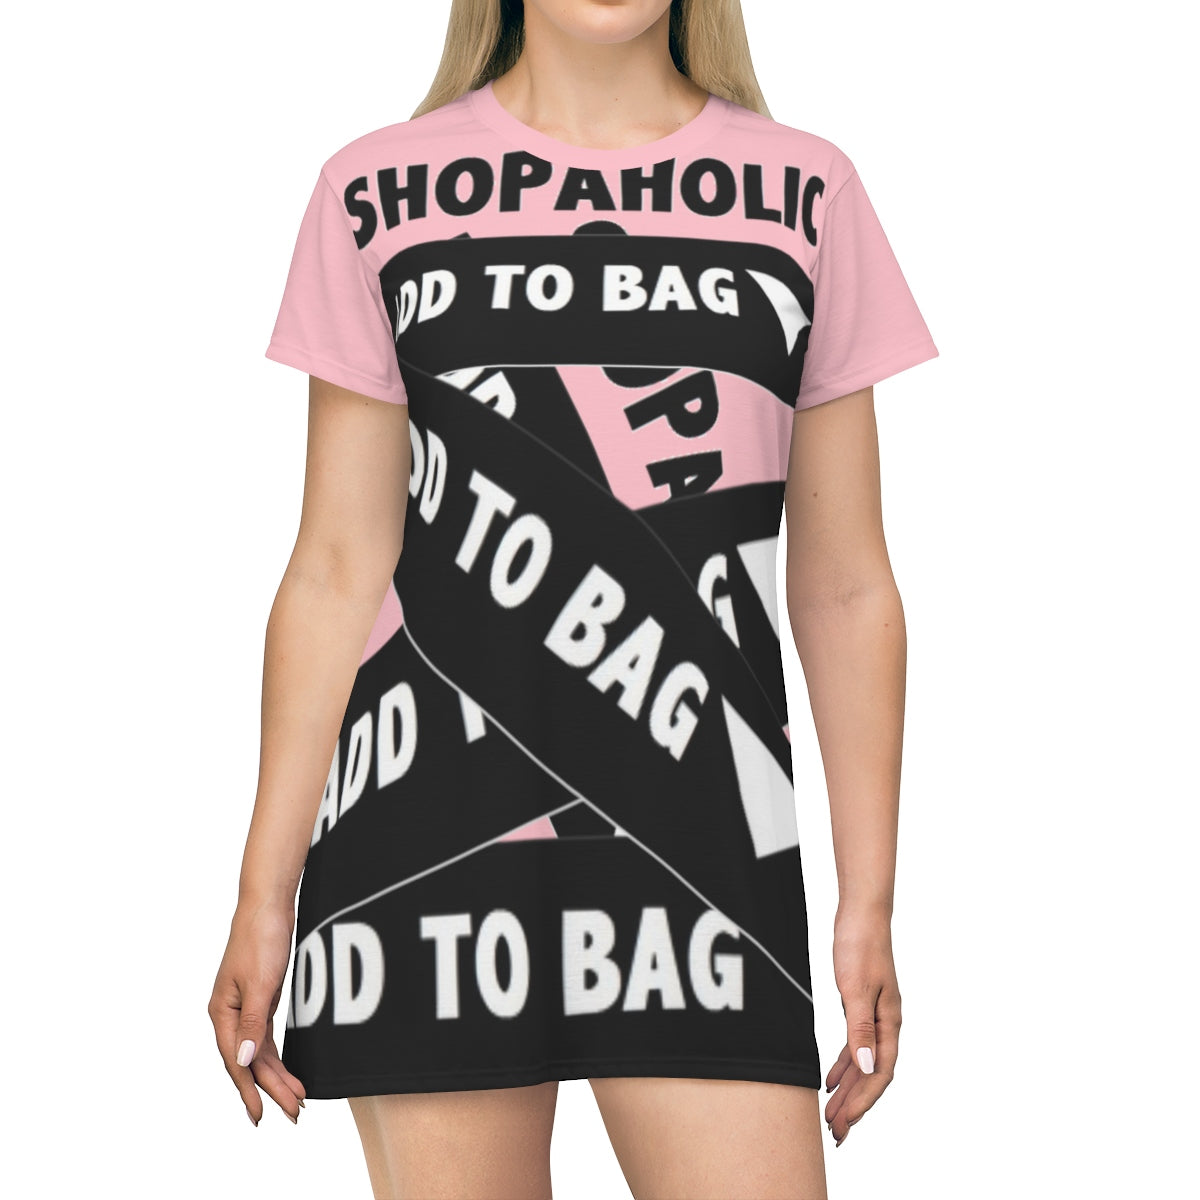 Shopaholic Add to Bag™ (Bandage/Pink) T-shirt Dress